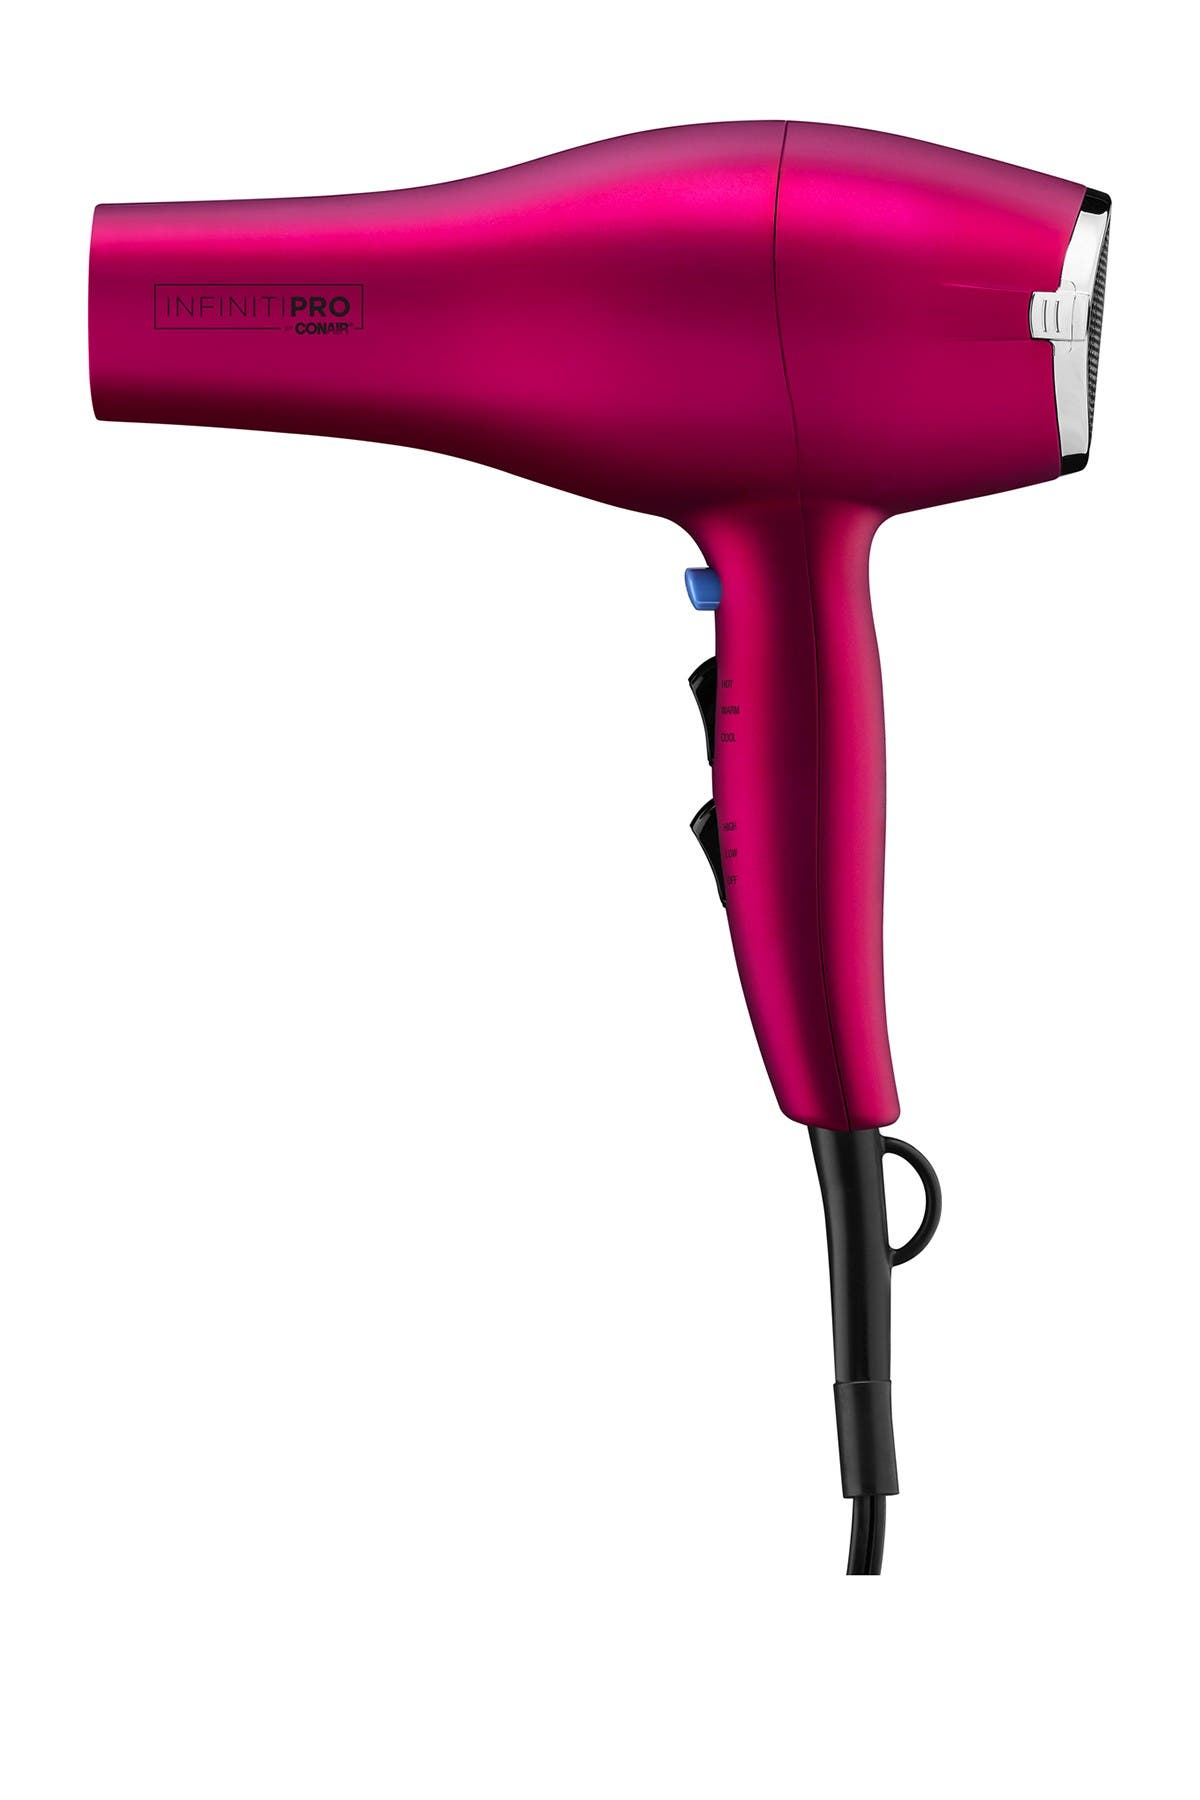 Infiniti Pro Full Size Dryer - Pink Conair